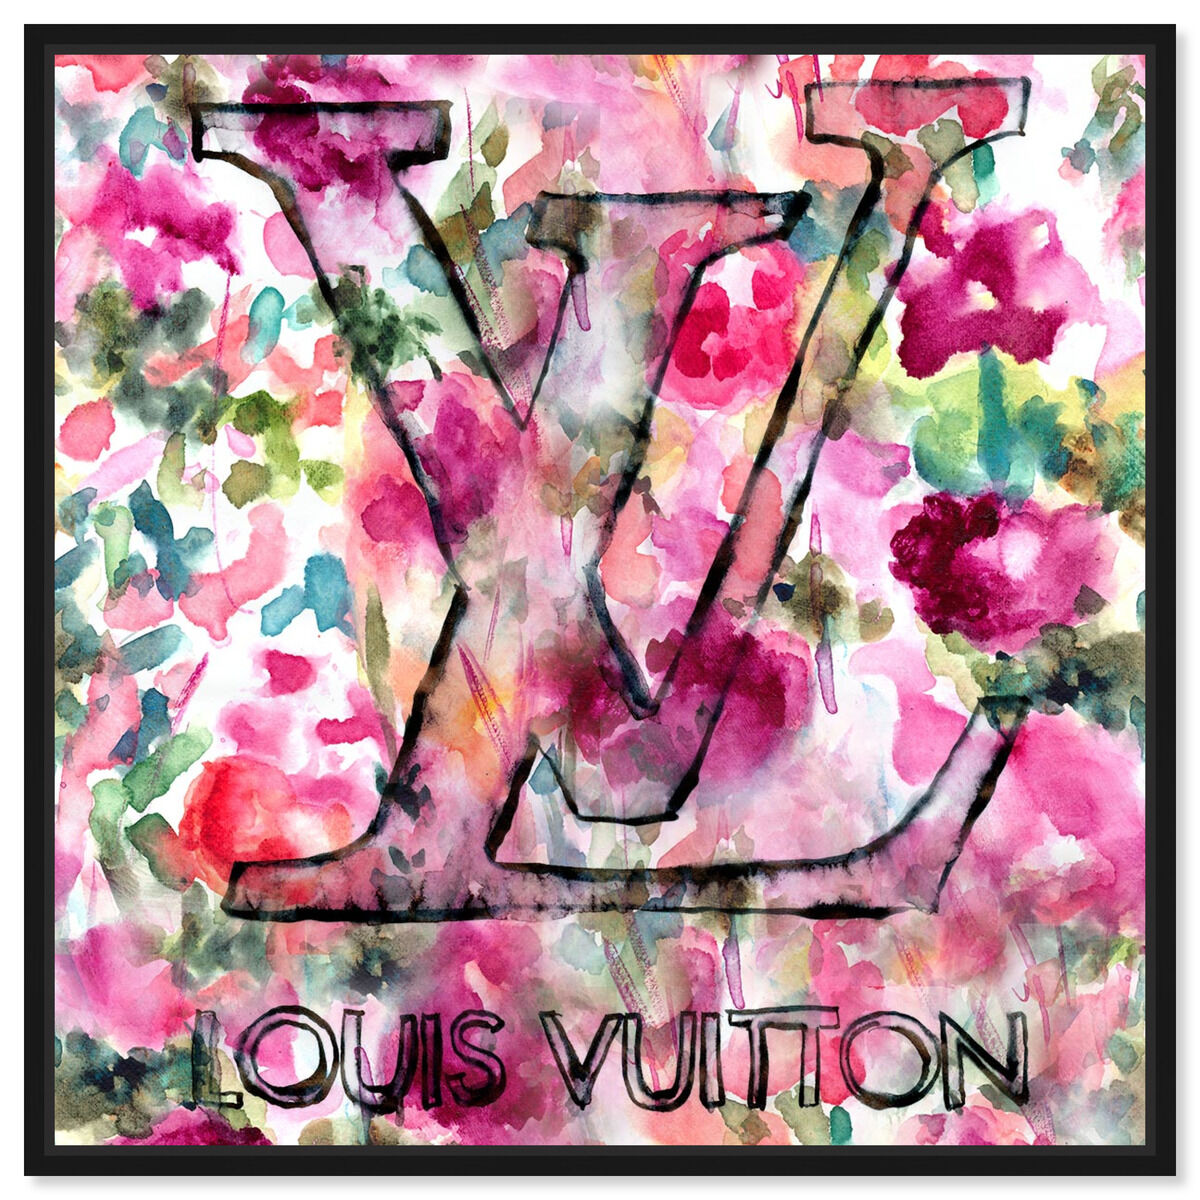 iCanvas Louis Vuitton Graffiti Lips by Julie Schreiber Framed Canvas Print   On Sale  Overstock  36839958